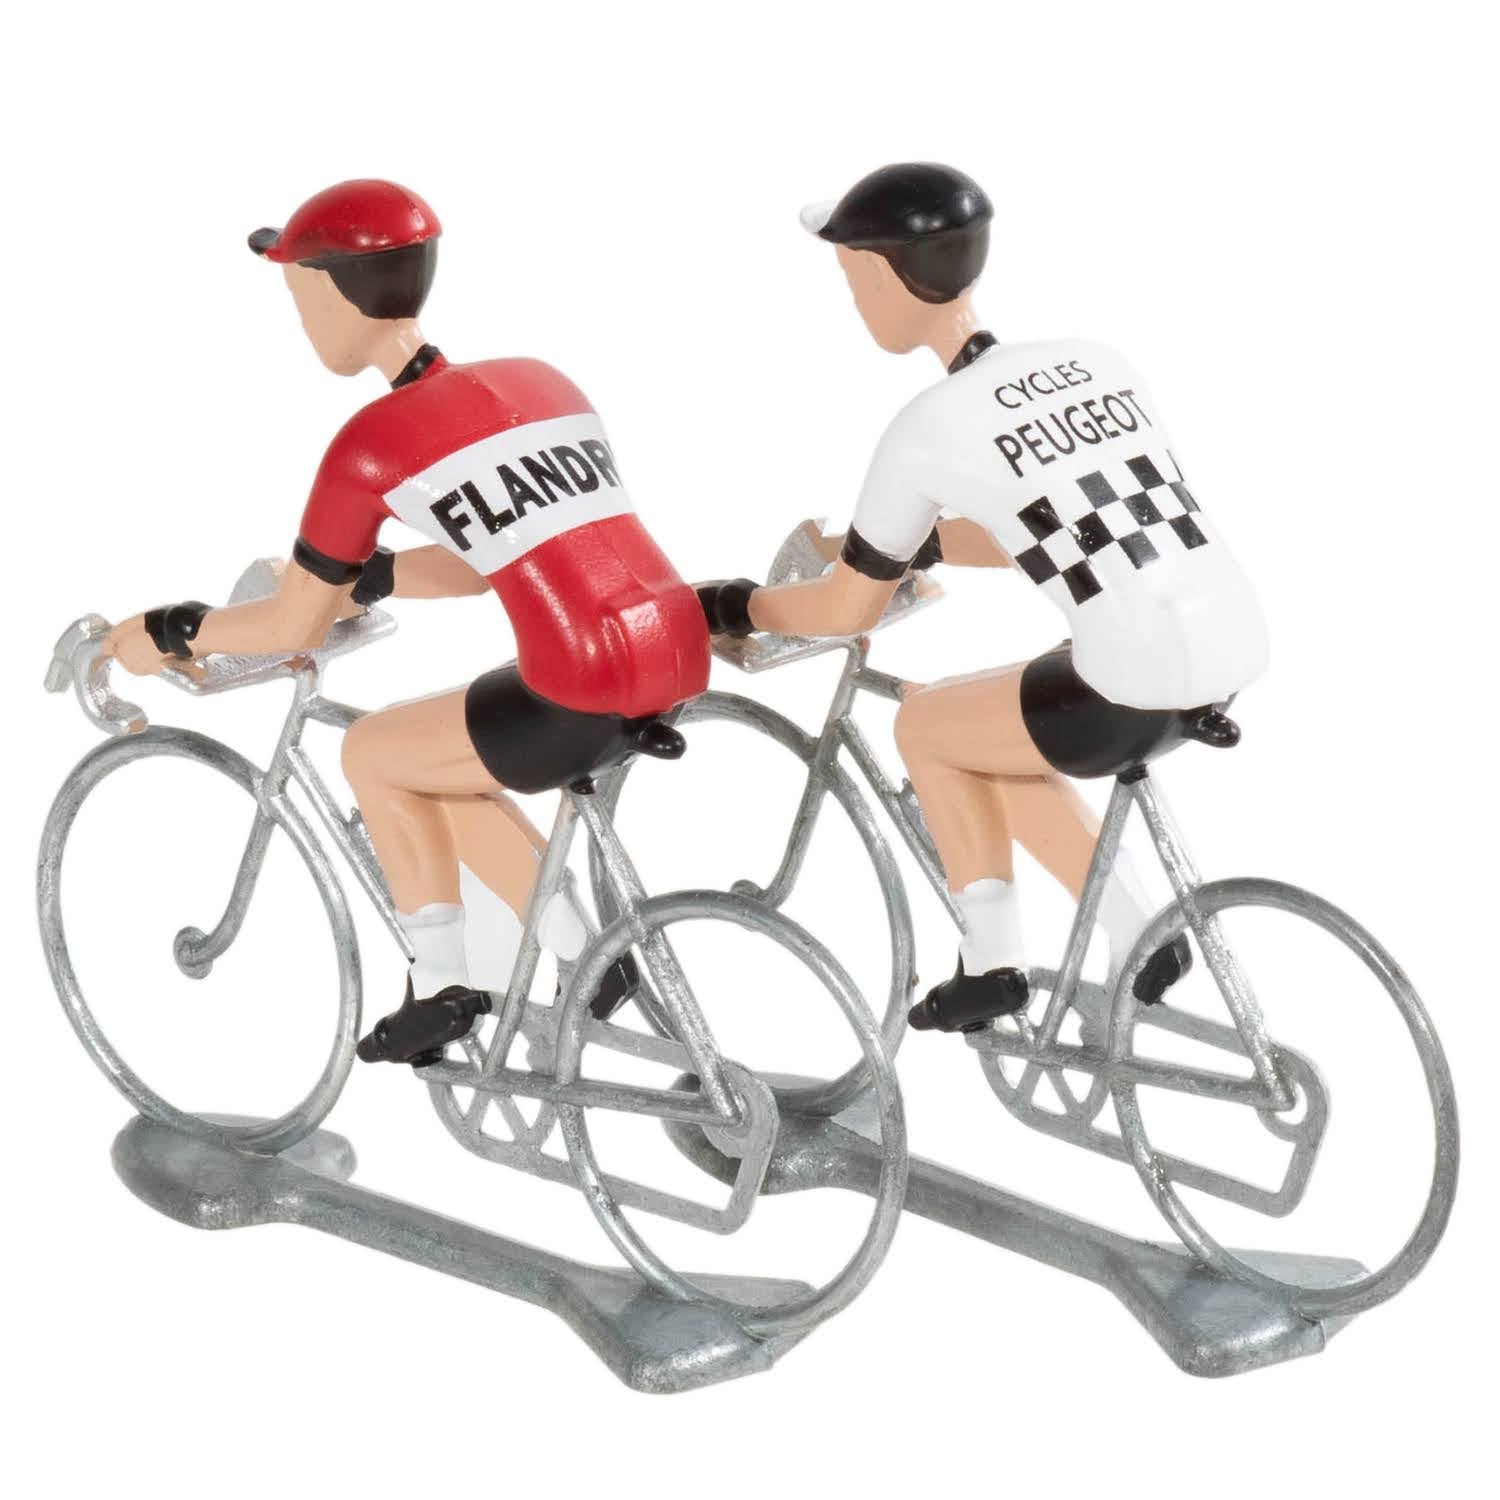 FLANDRIENS The Original Flandriens 2 Cyclists Kit